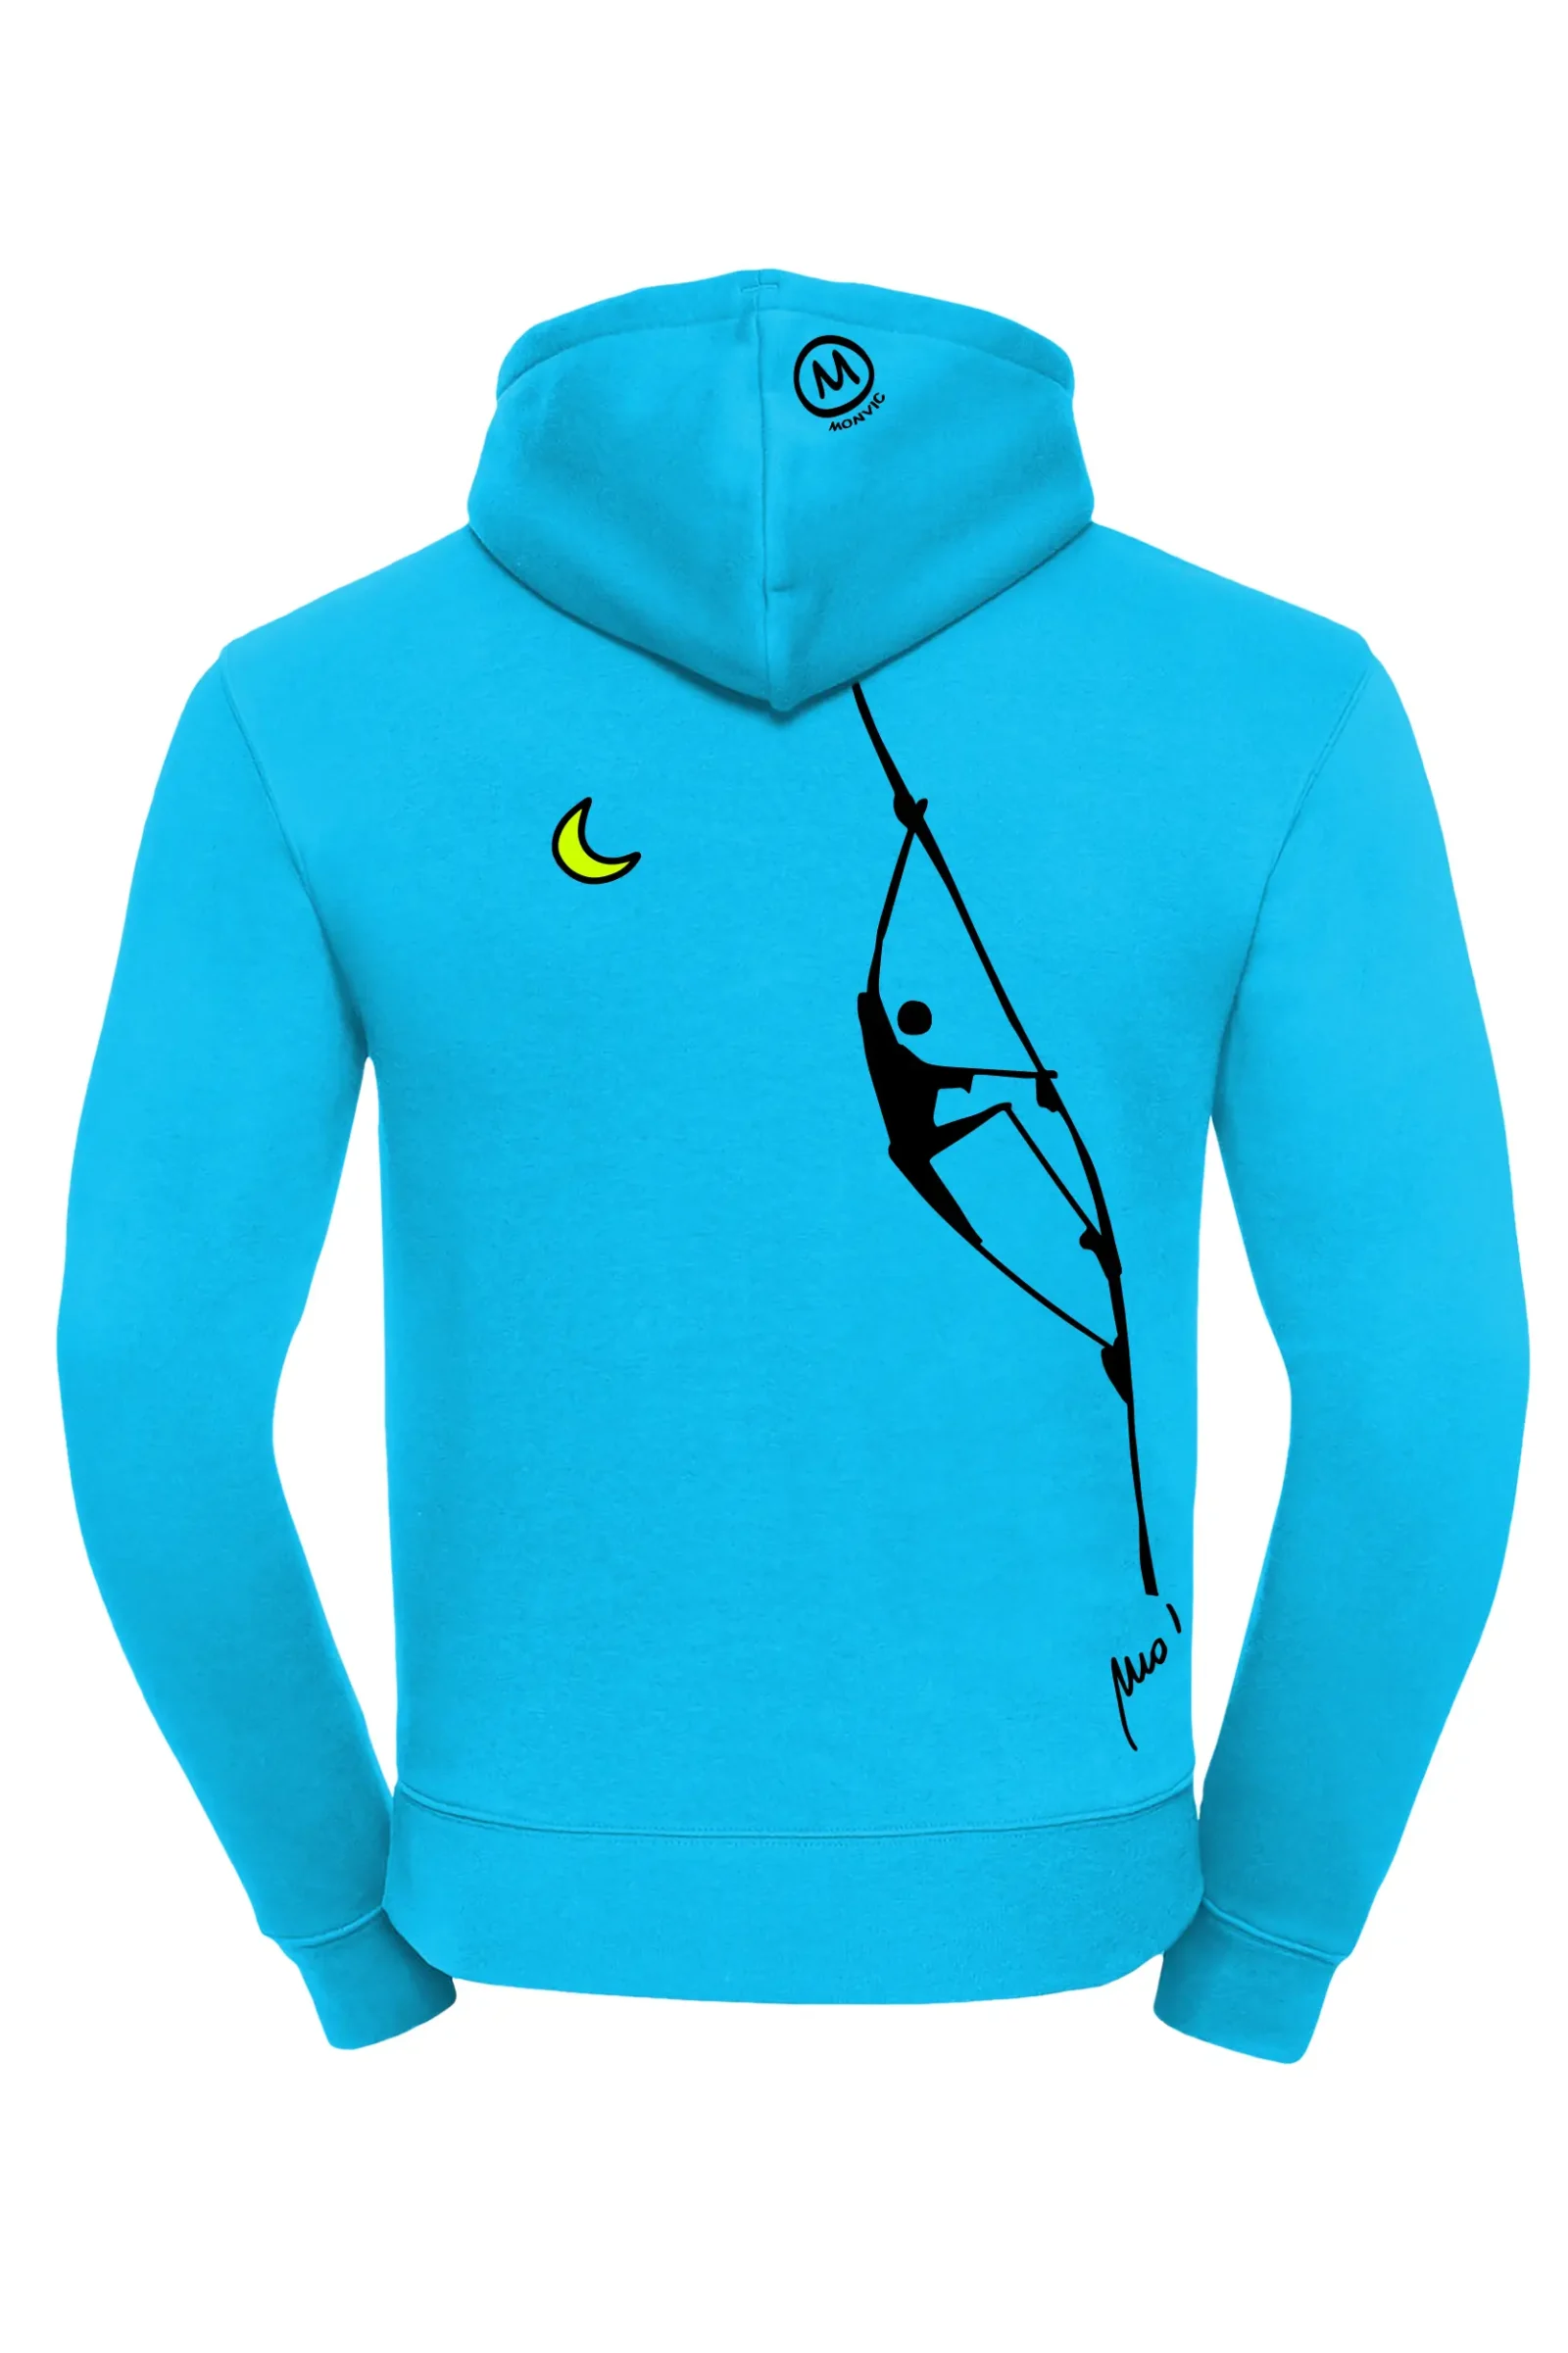 Men's / unisex hoodie - light blue - "Teba" climbing graphics - NAVAJO MONVIC